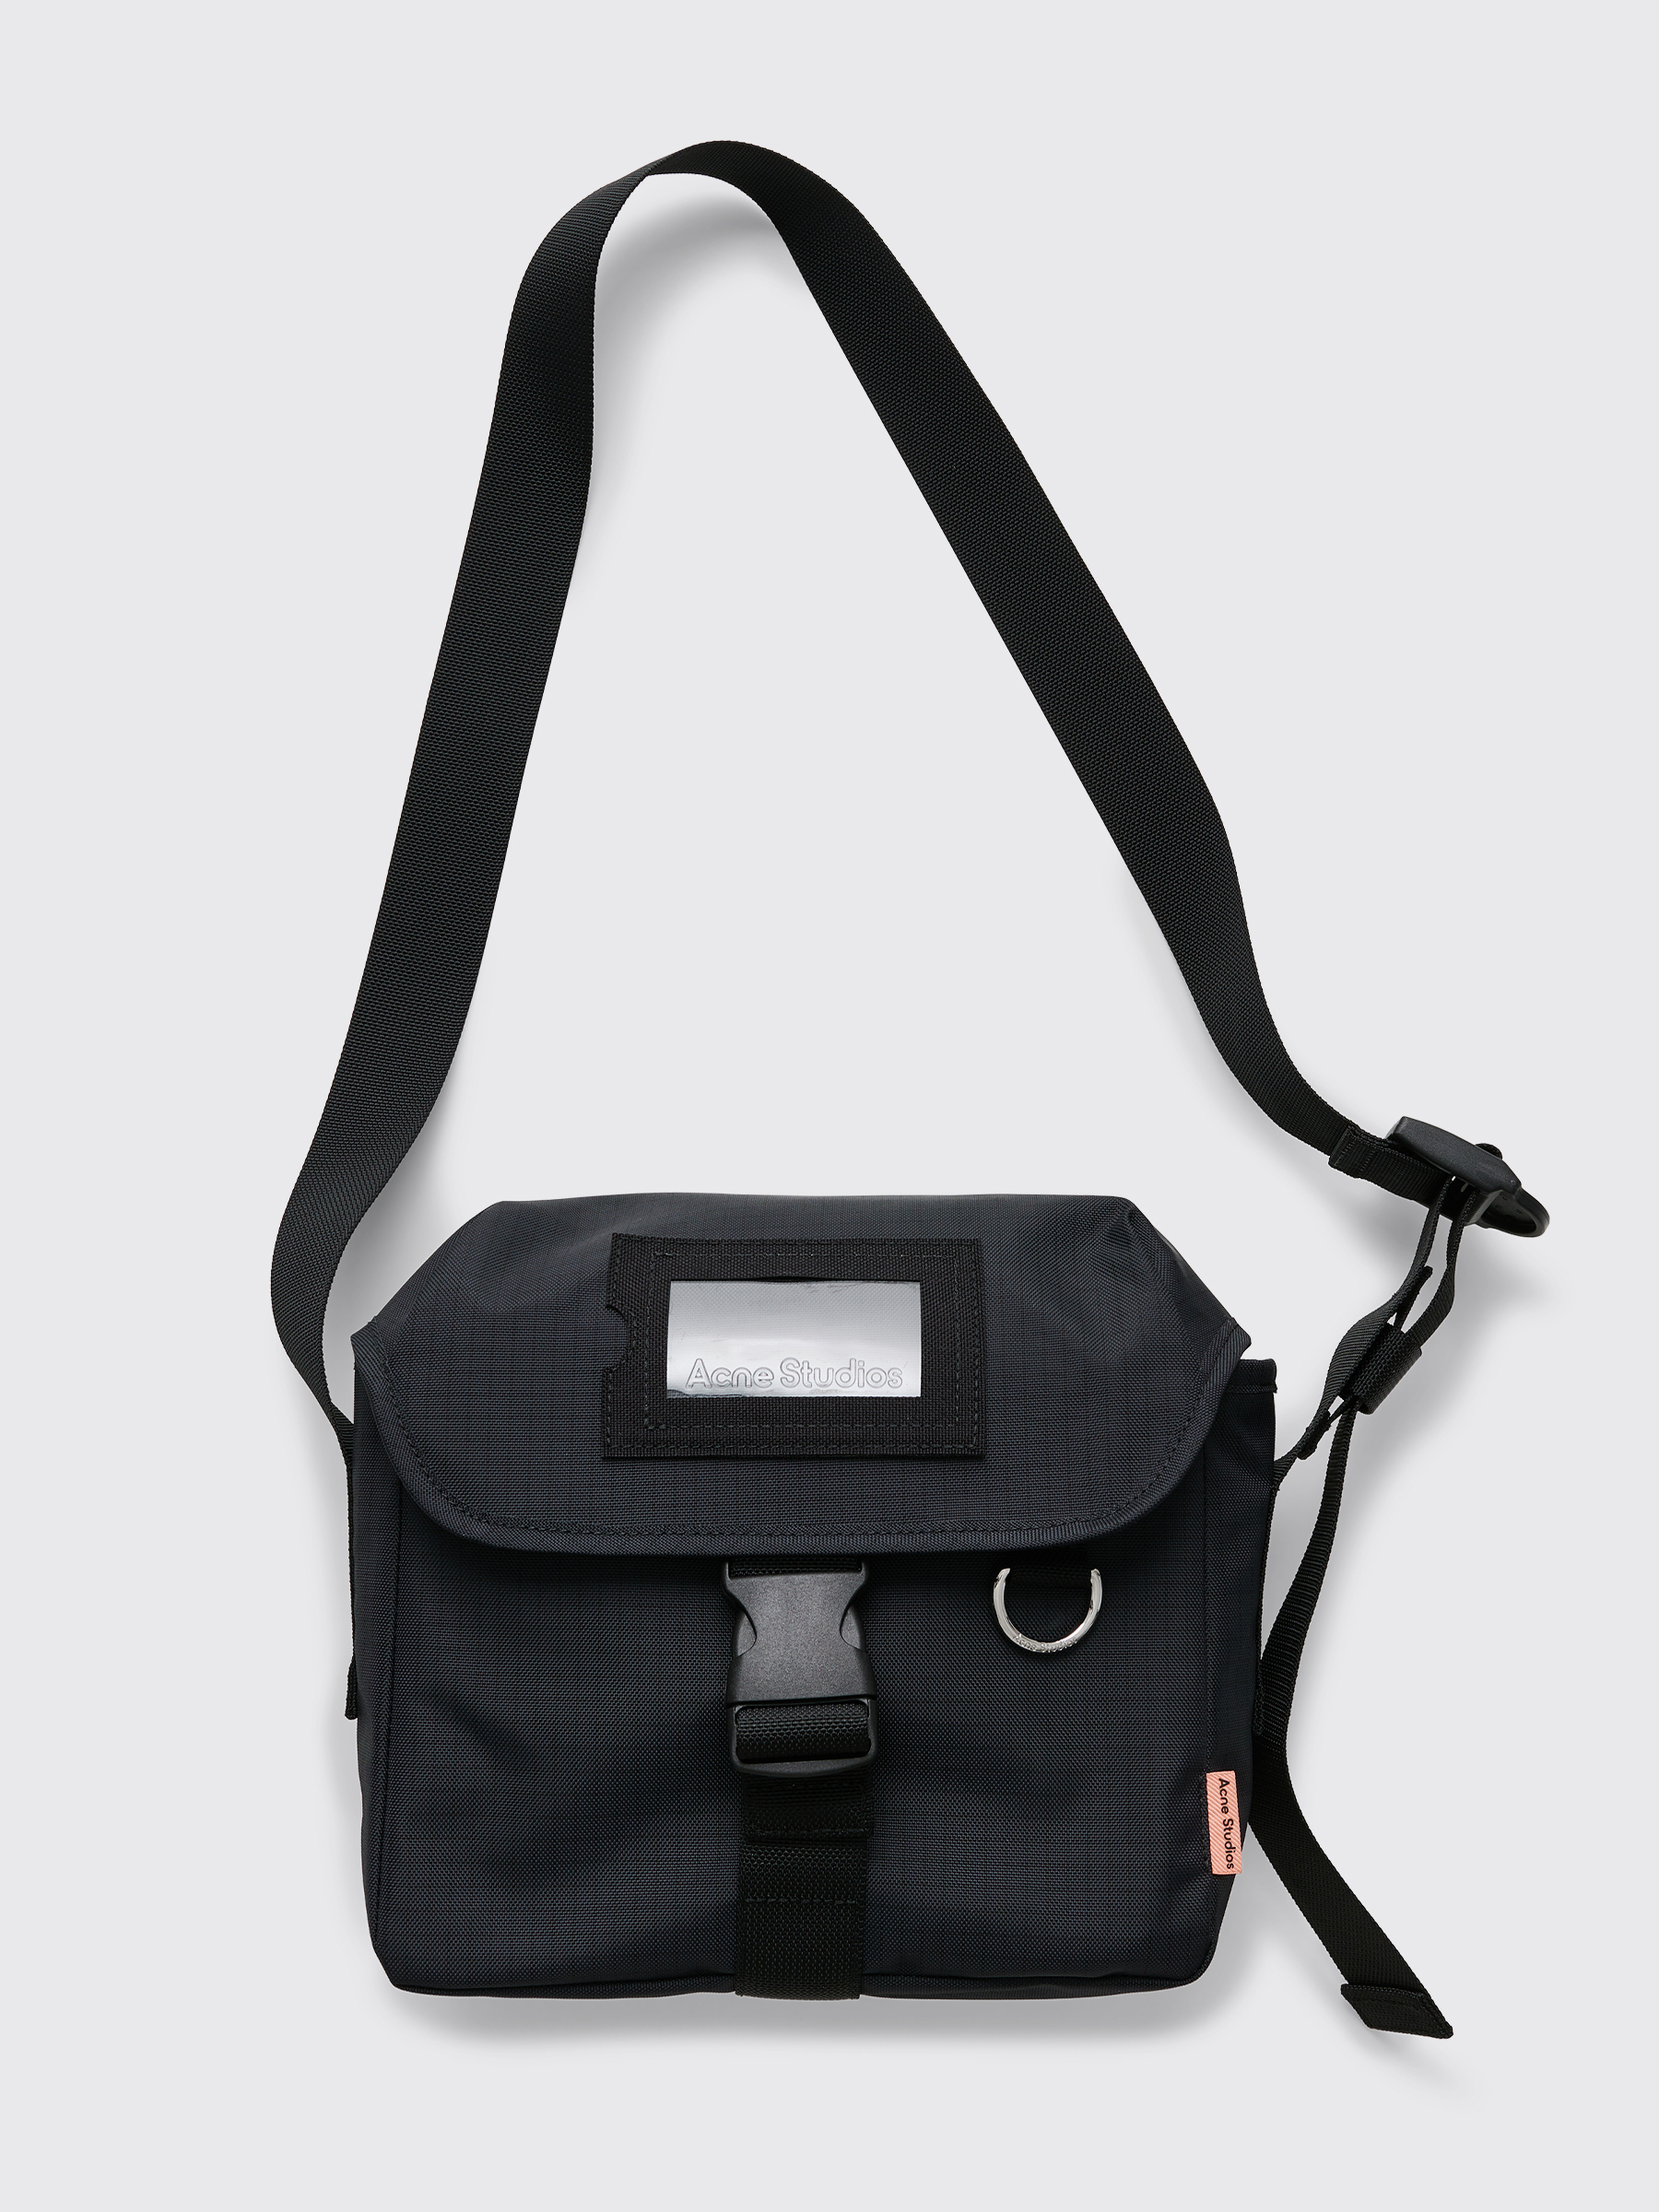 Très Bien - Acne Studios Nylon Messenger Bag Black